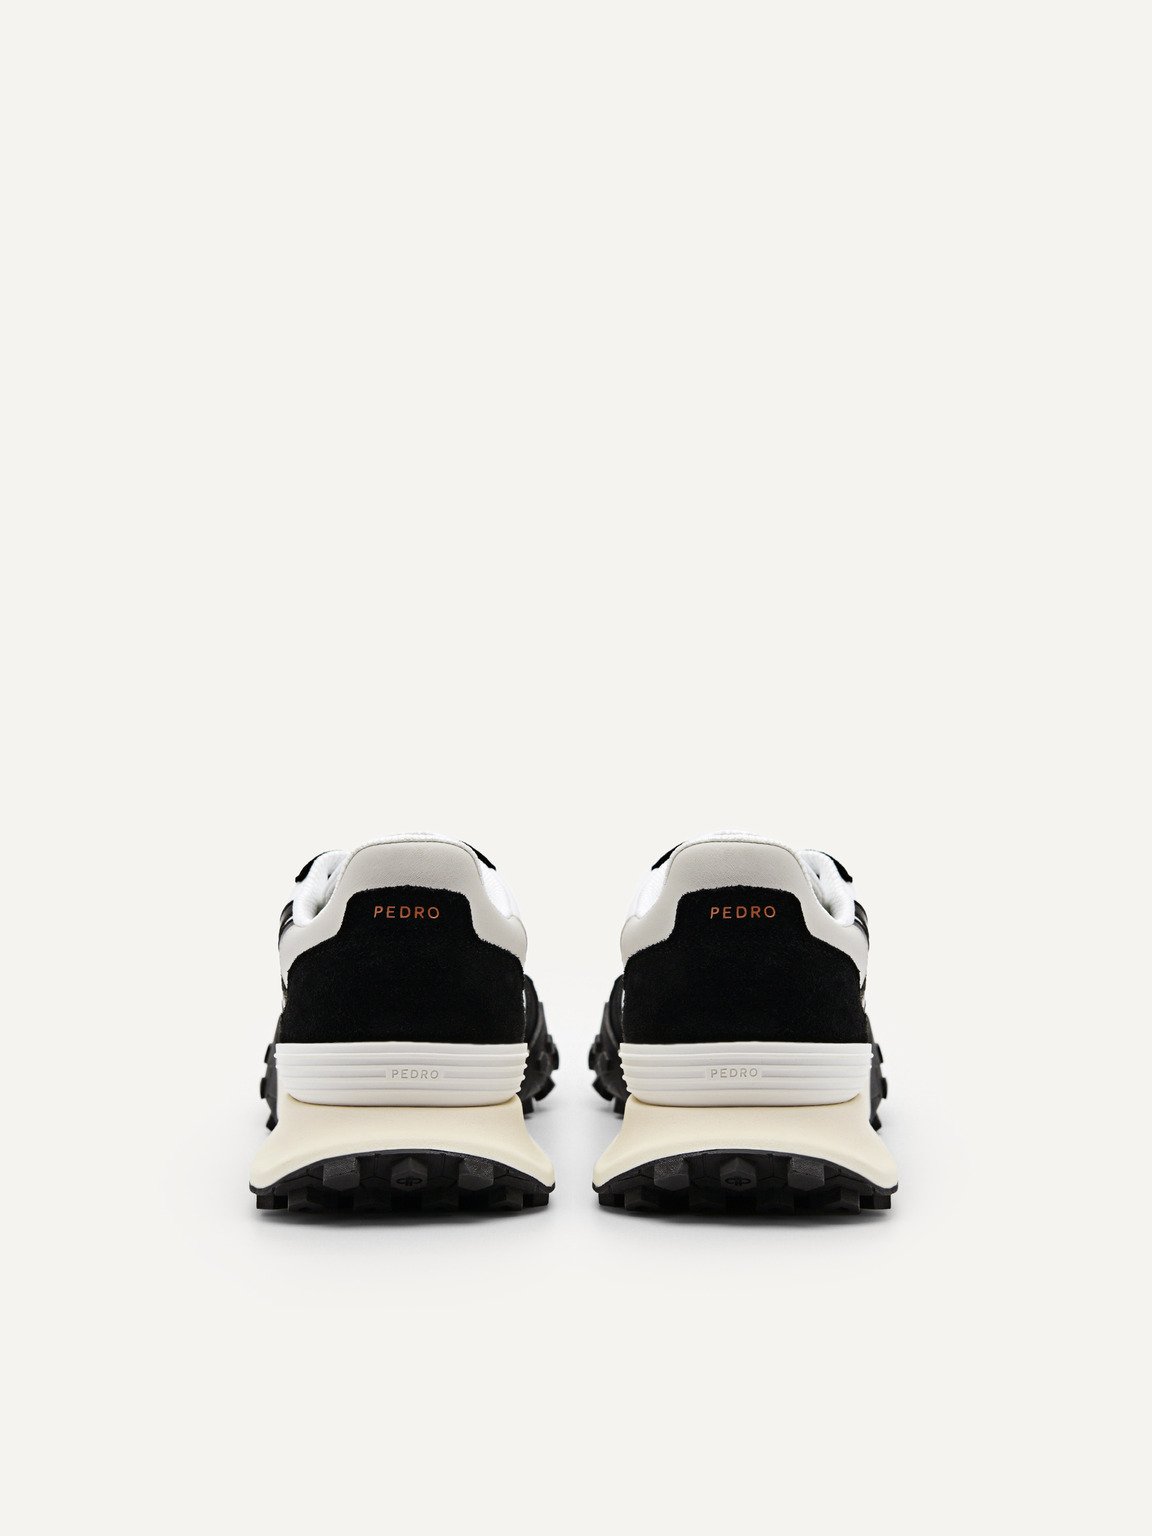 PEDRO Icon Suede Sneakers, Black